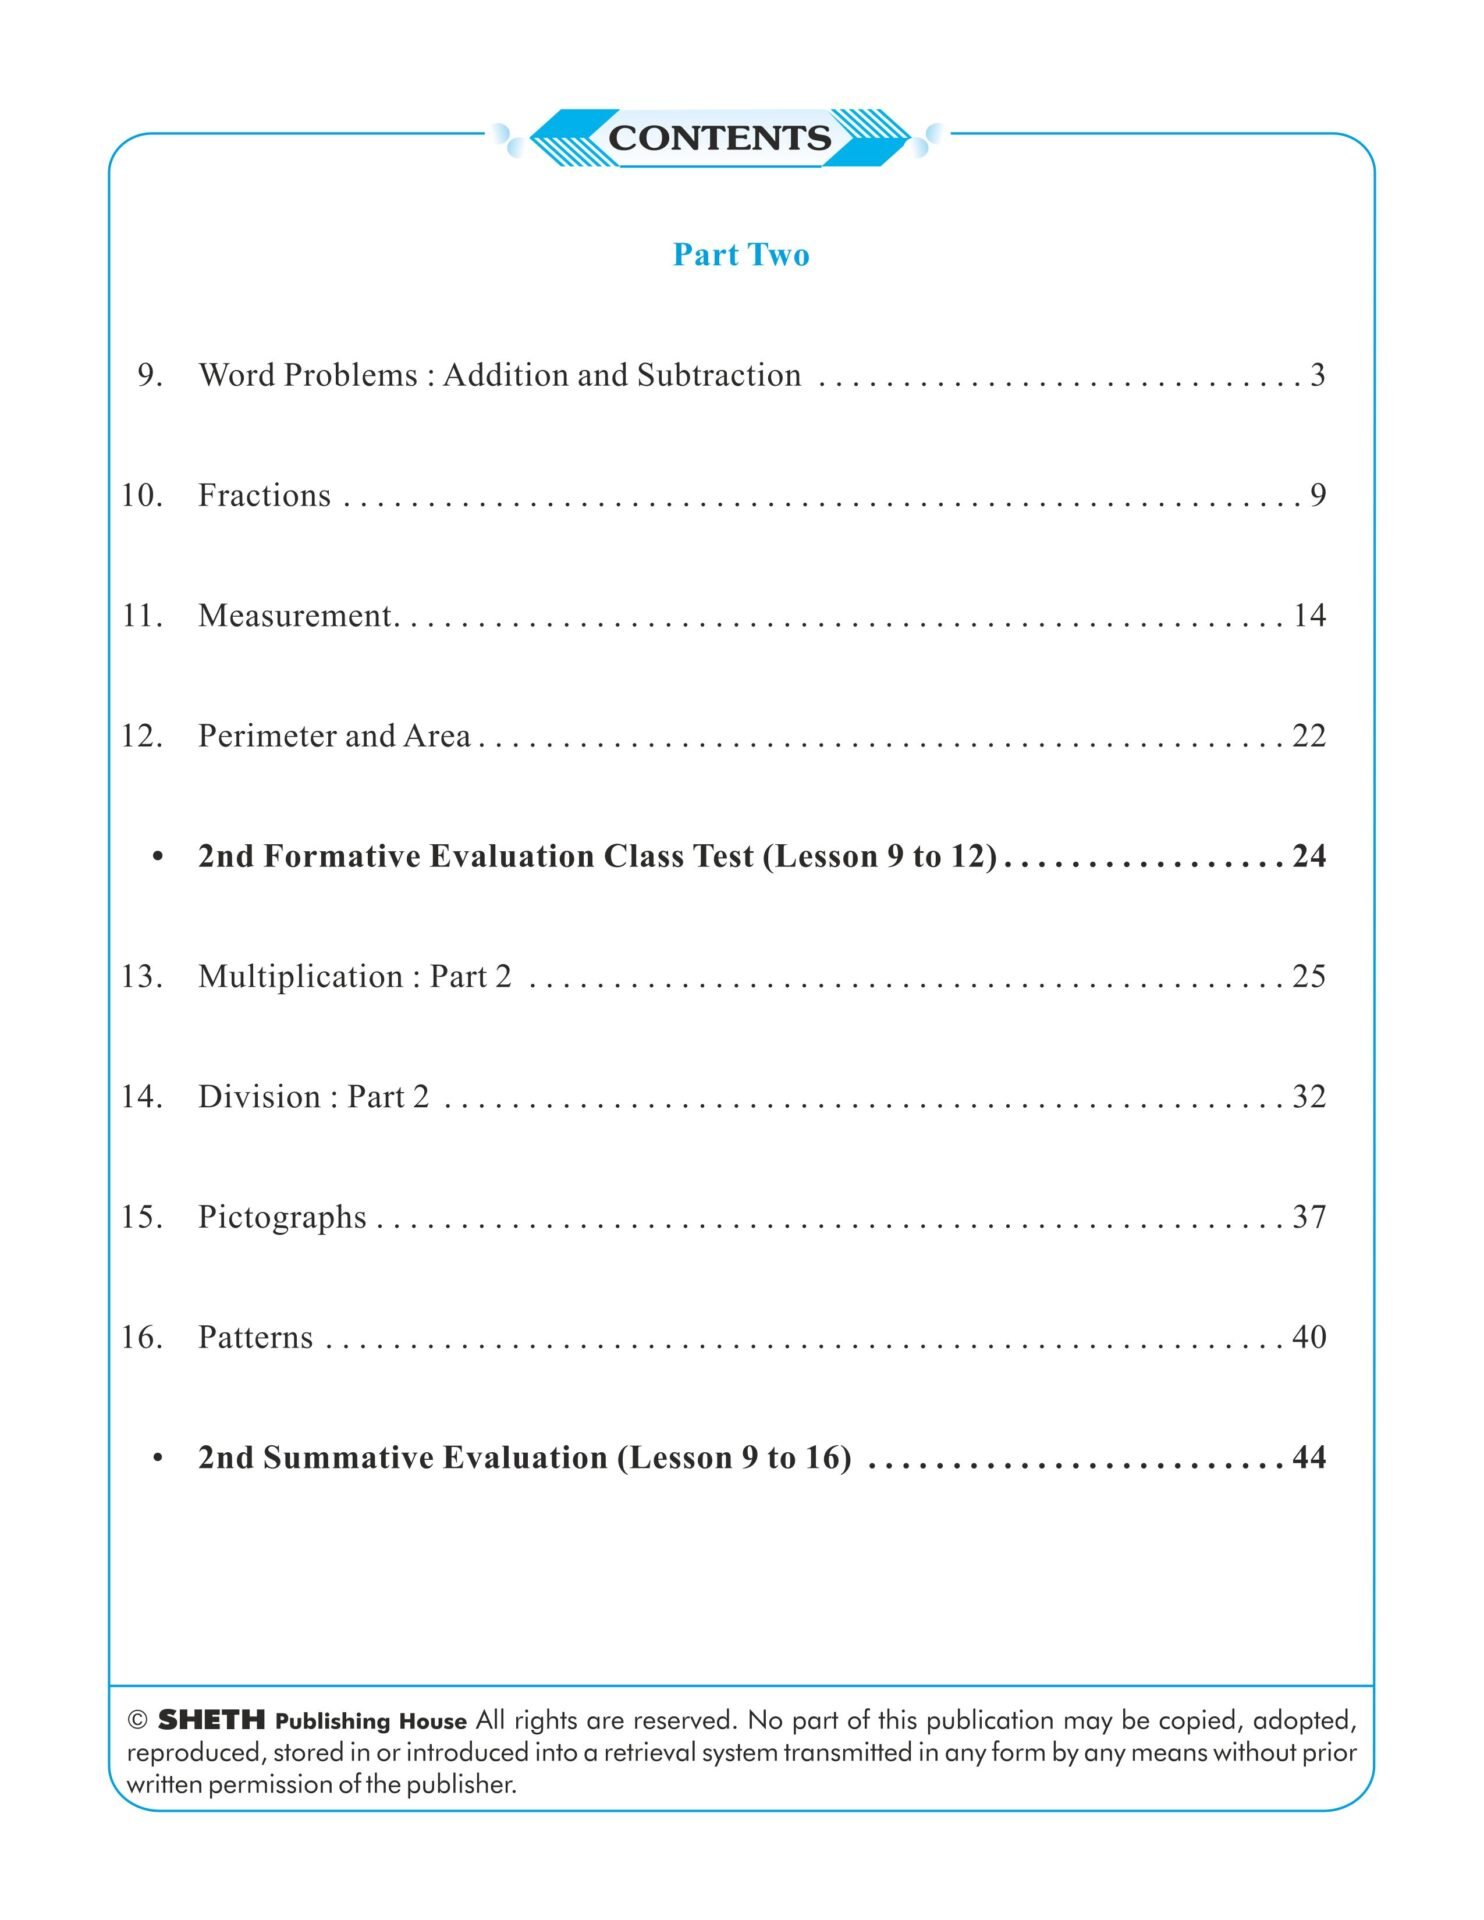 CCE Pattern Nigam Scholar Workbooks Mathematics Standard 4 Term 2 Part 2 2